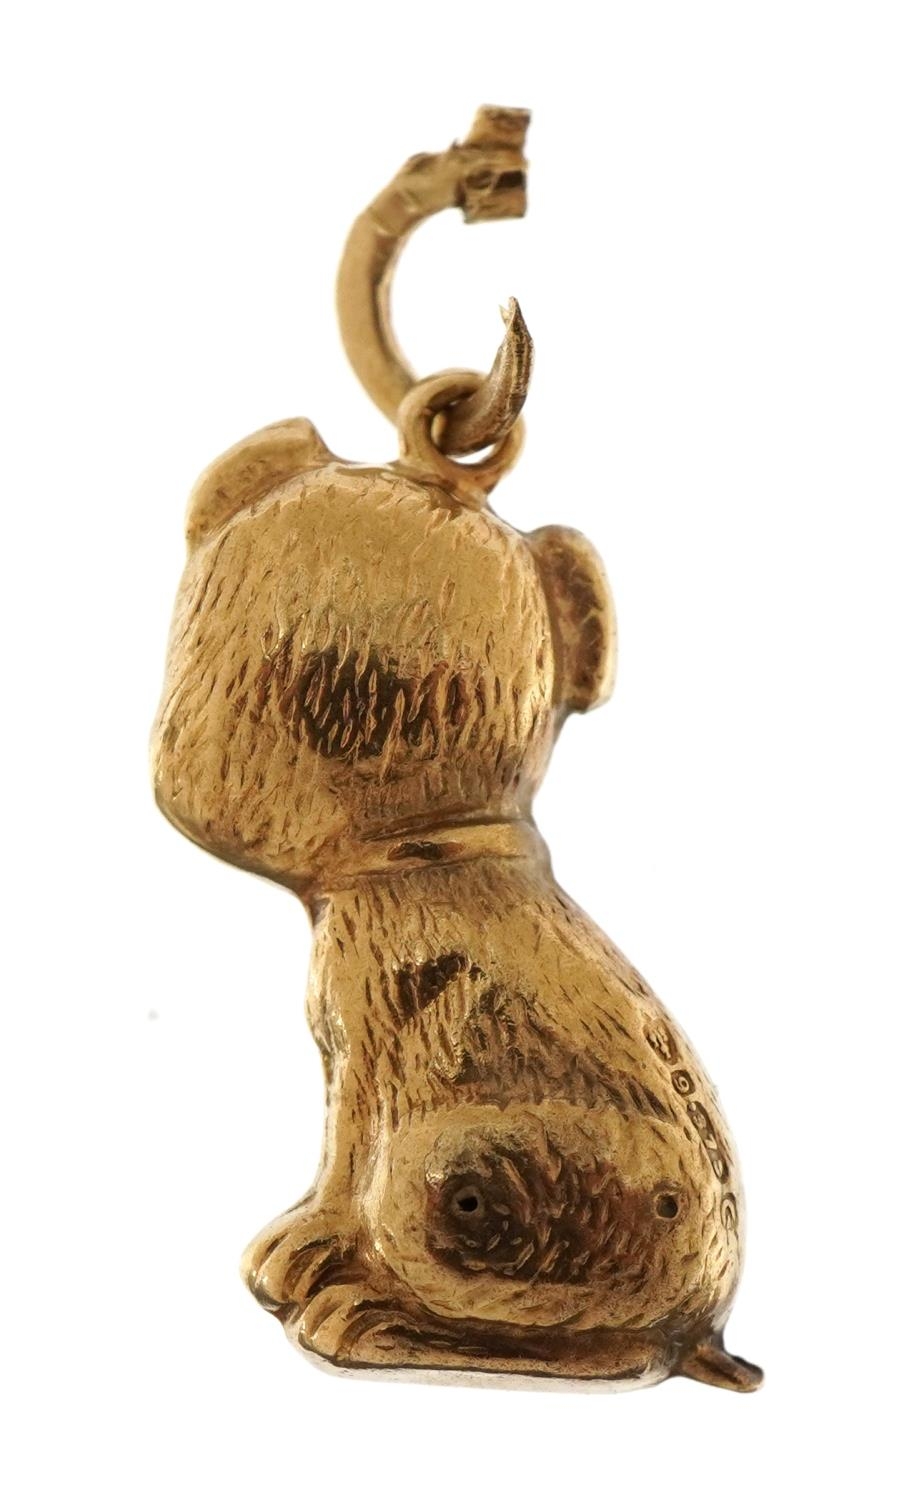 9ct gold Bonzo dog charm, 1.9cm high, 0.8g - Image 2 of 3